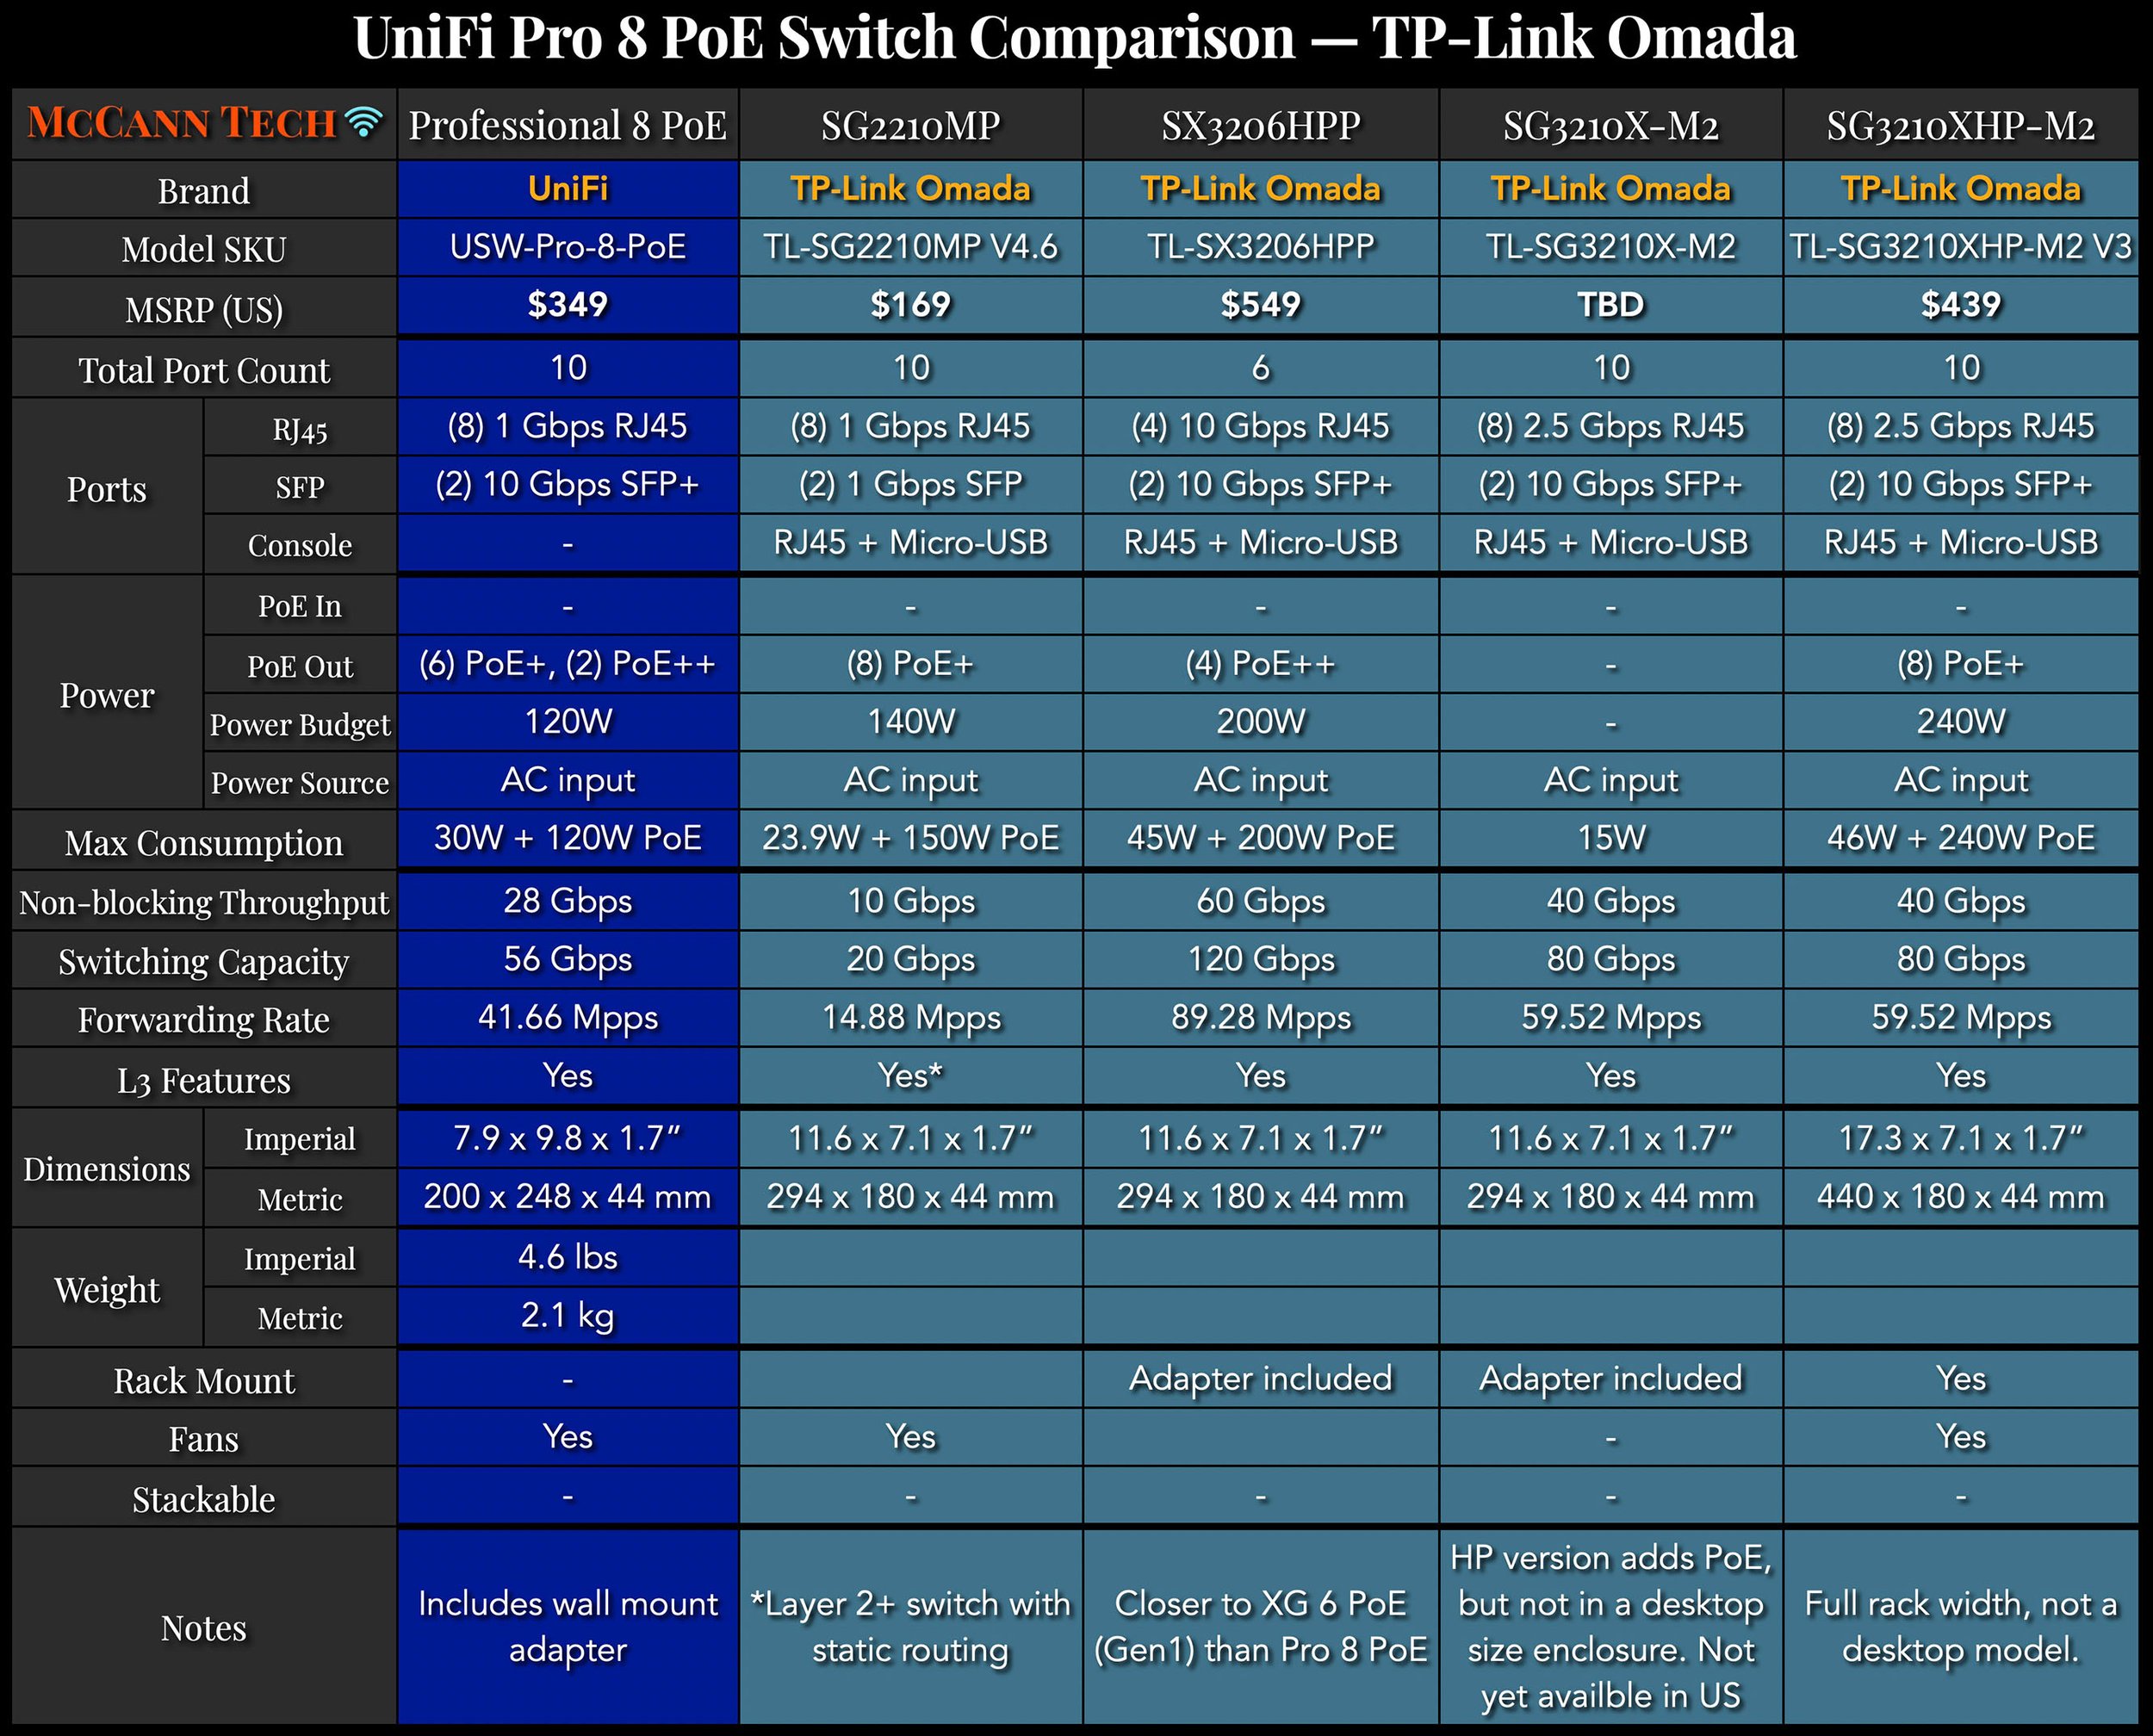  UniFi Pro 8 PoE versus TP-Link Omada 